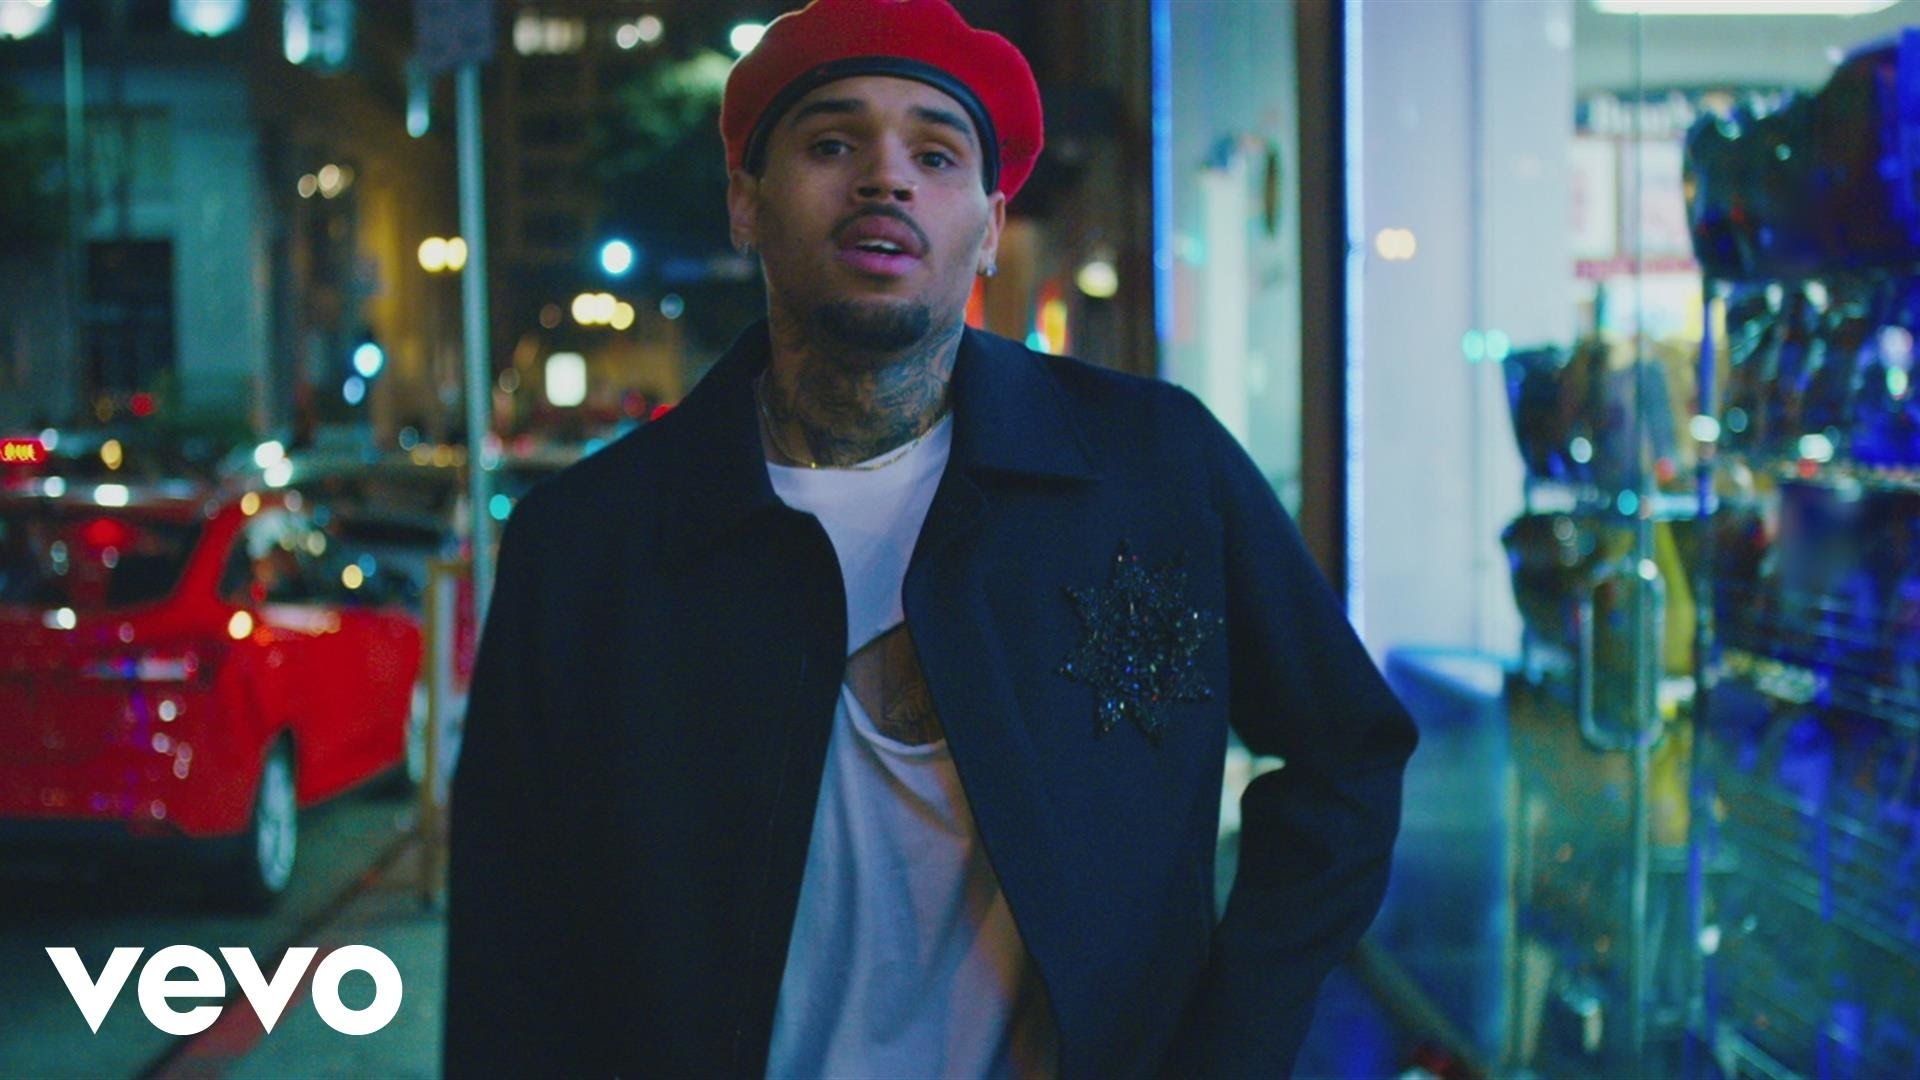 Chris Brown Tattoos Hd Wallpaper Hd Wallpapers Wsw2015427 - Video Chris Brown Songs - HD Wallpaper 